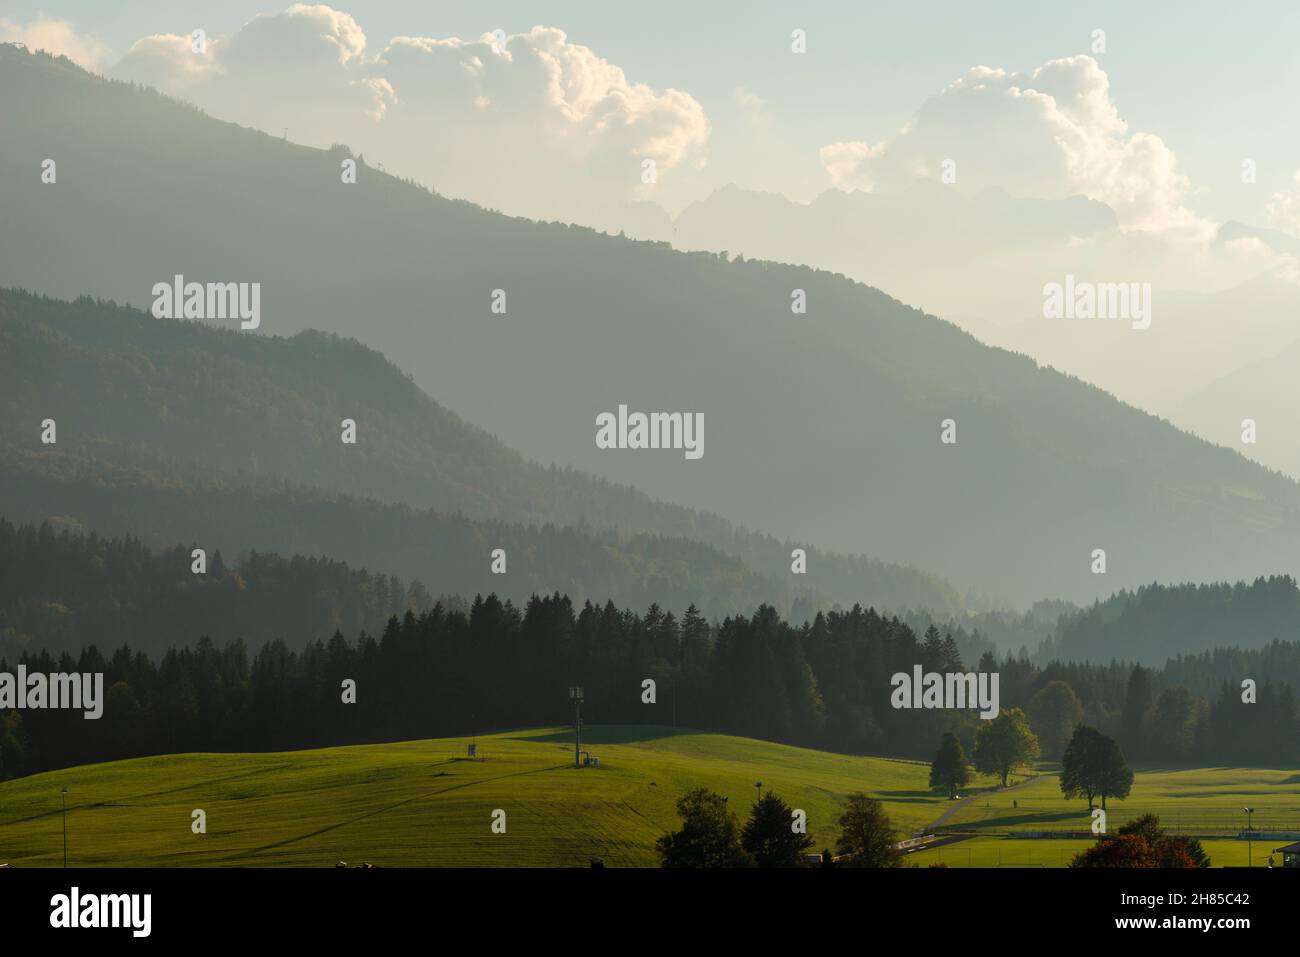 View of the Bavarian Alps in warm evening light, Reit im Winkl, Chiemgau region, upper Bavaria, Bavarian Alps, Southern Germany, Europe Stock Photo